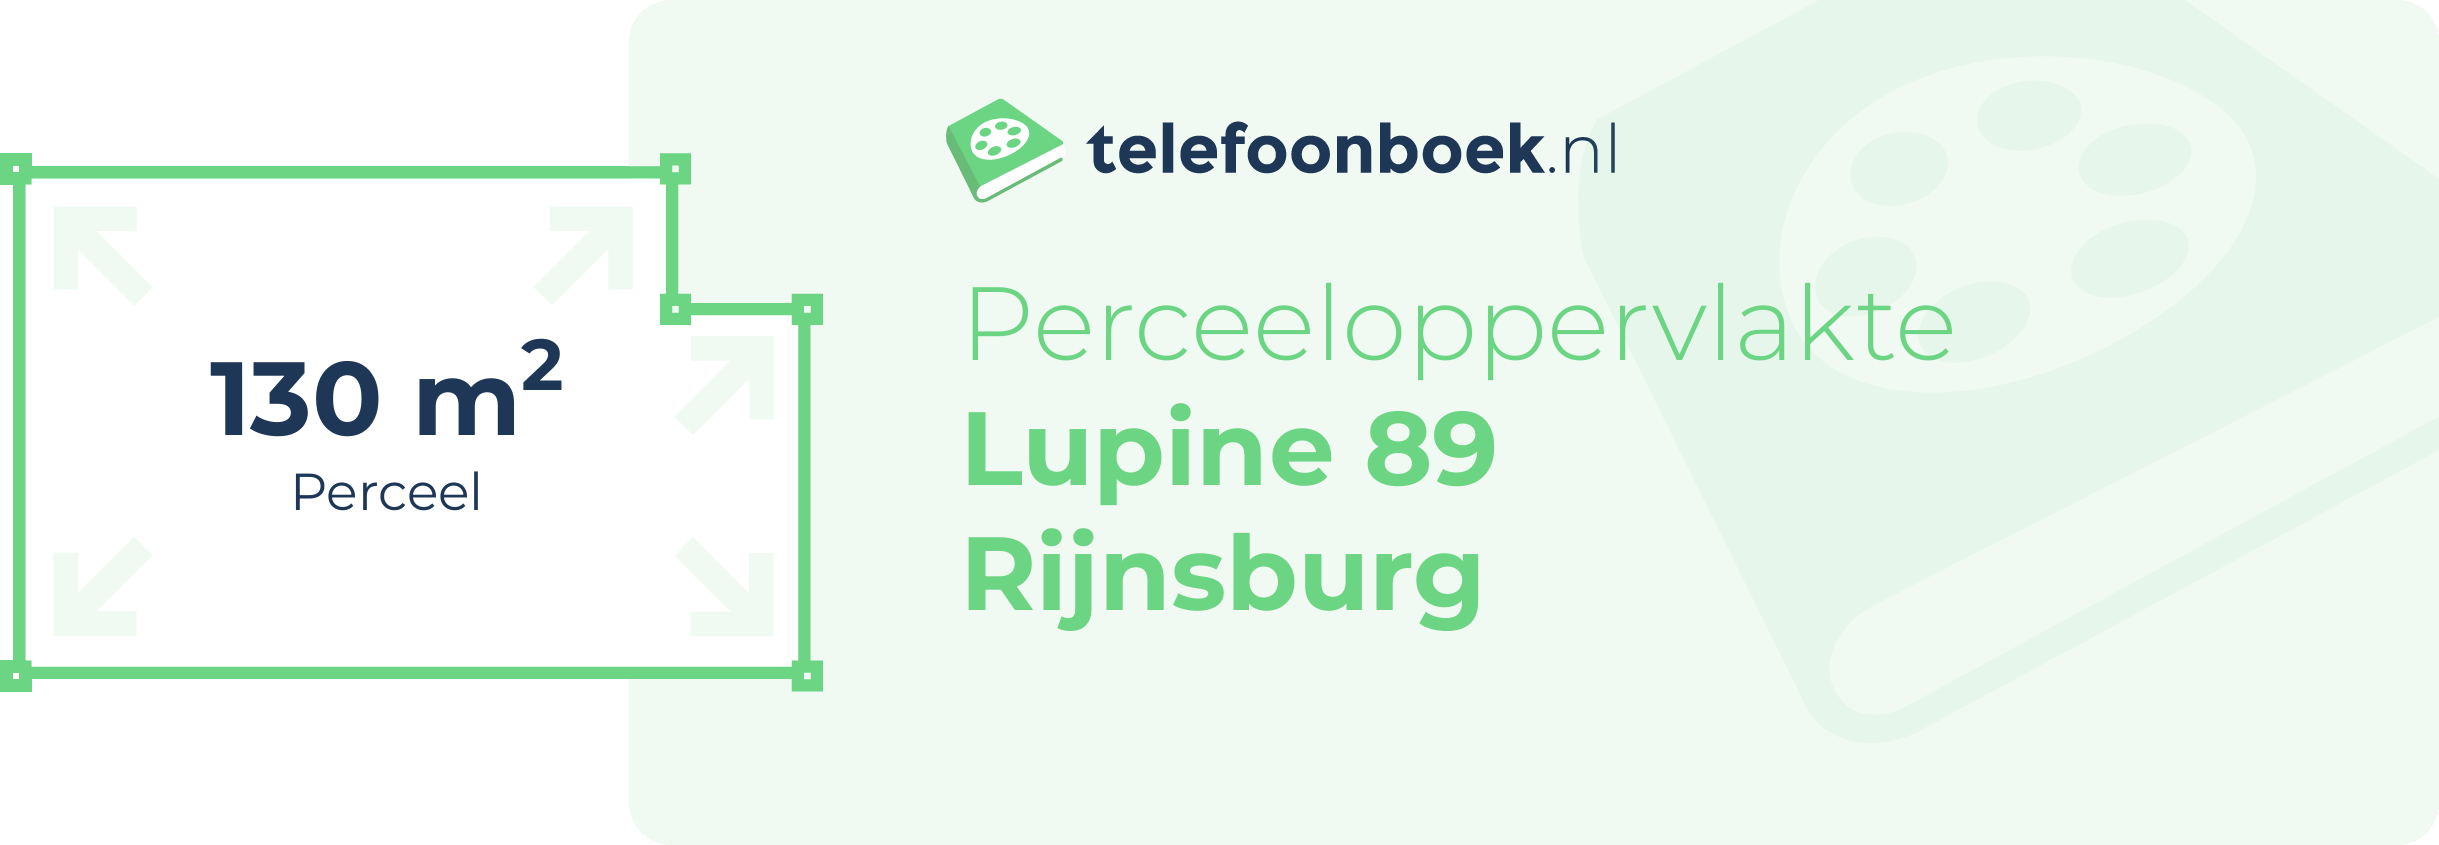 Perceeloppervlakte Lupine 89 Rijnsburg